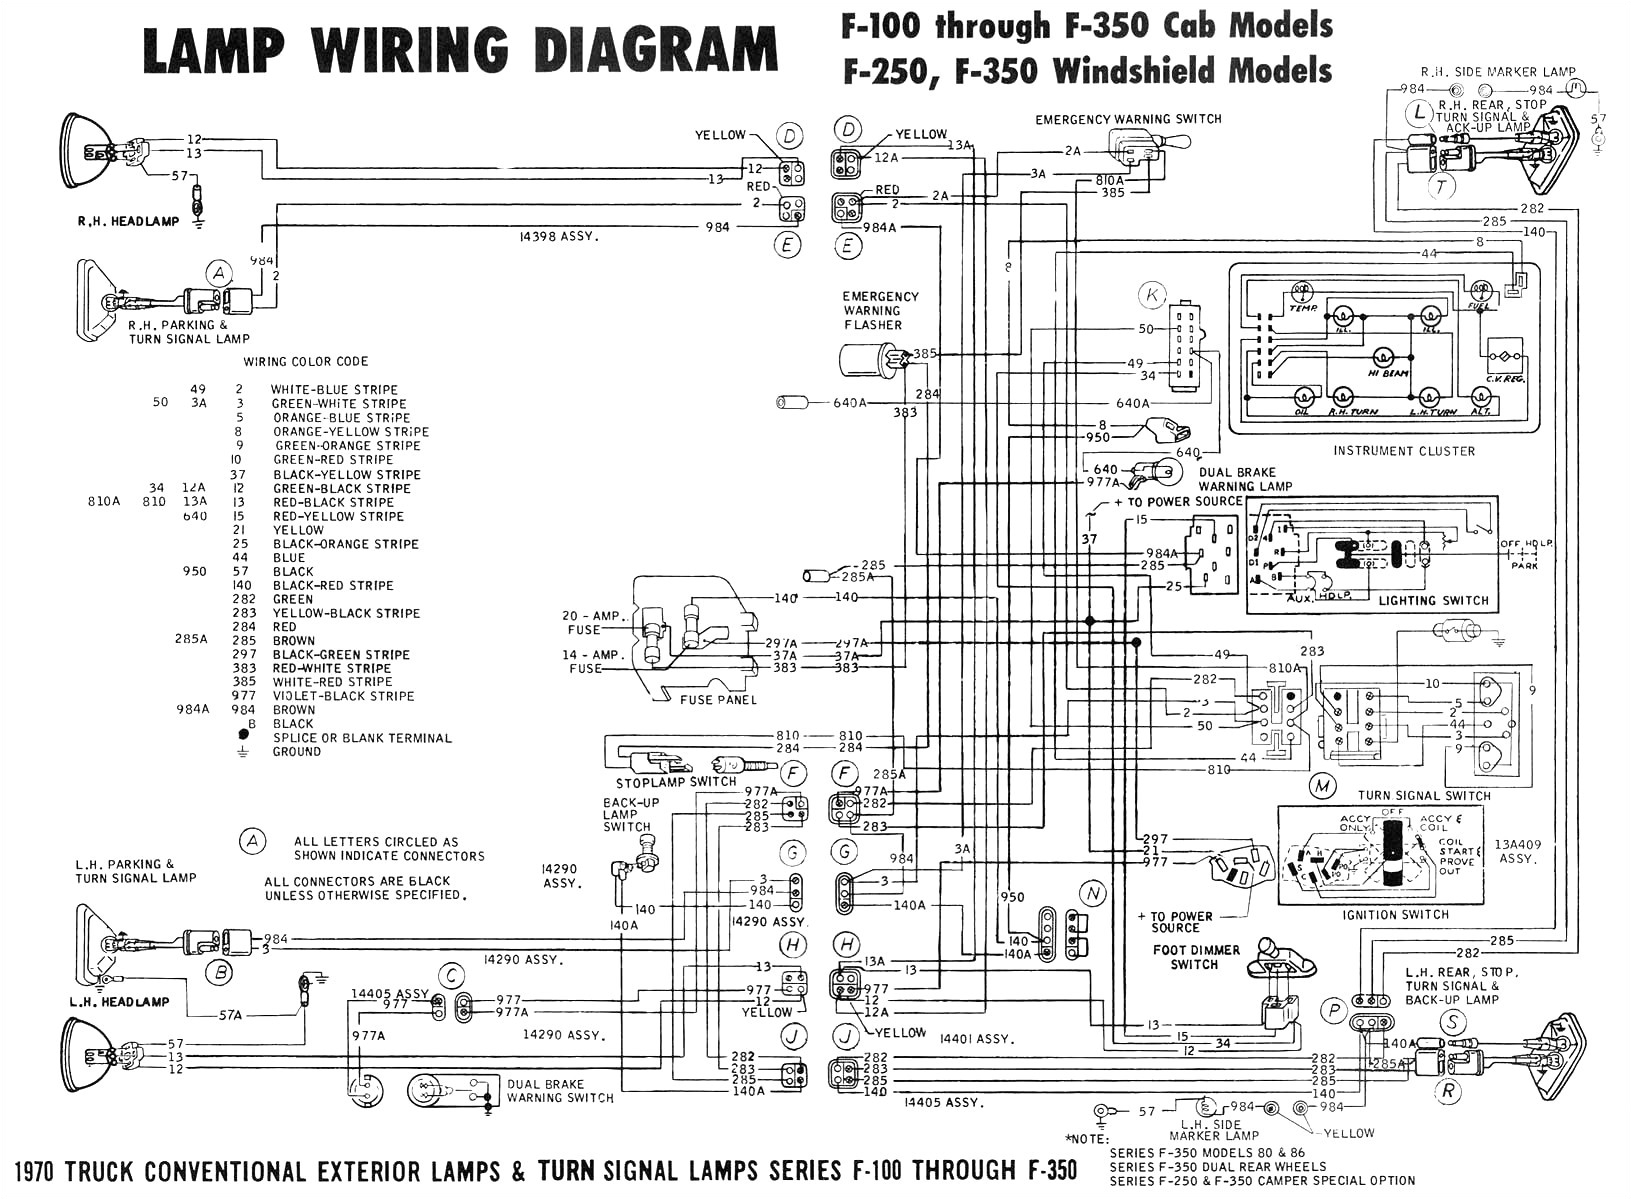 1997 ford truck wiring diagram wiring diagram perfomance 97 ford truck trailer wiring wiring diagram 1997